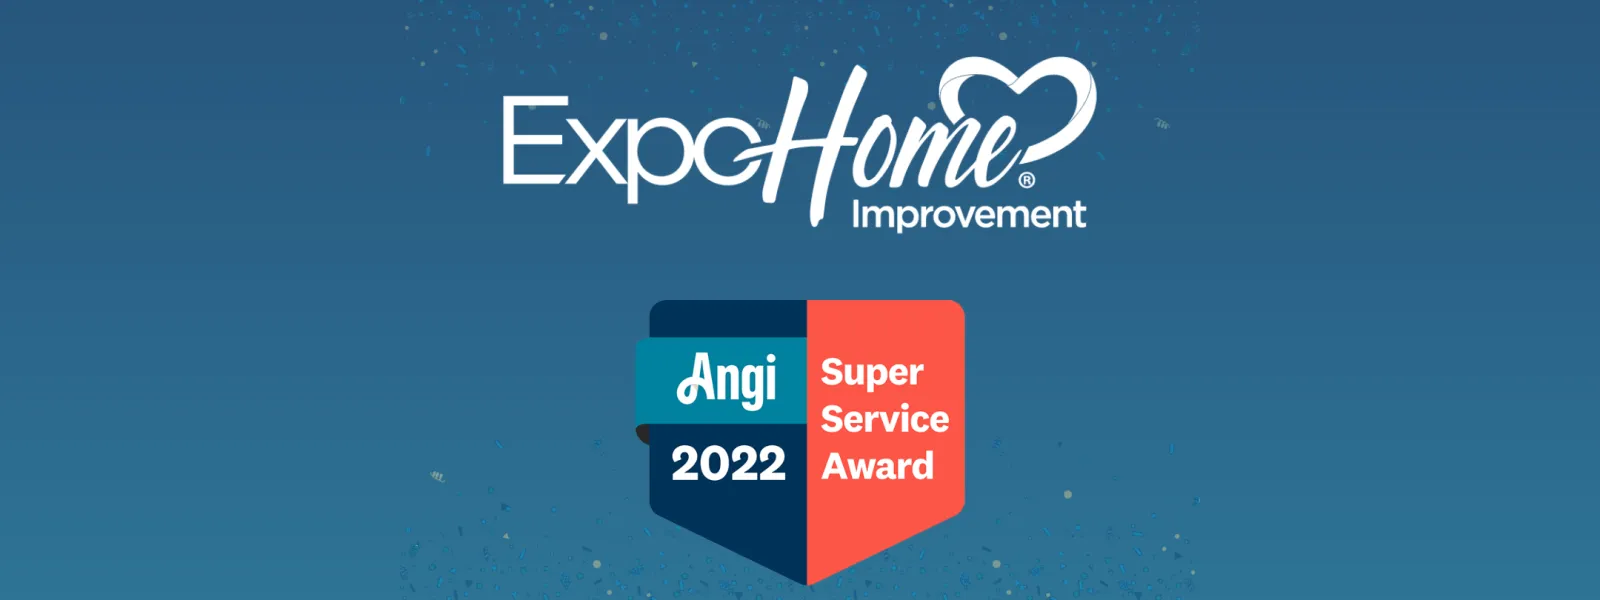 Expo Home Improvement Receives the Angi Super Service Award